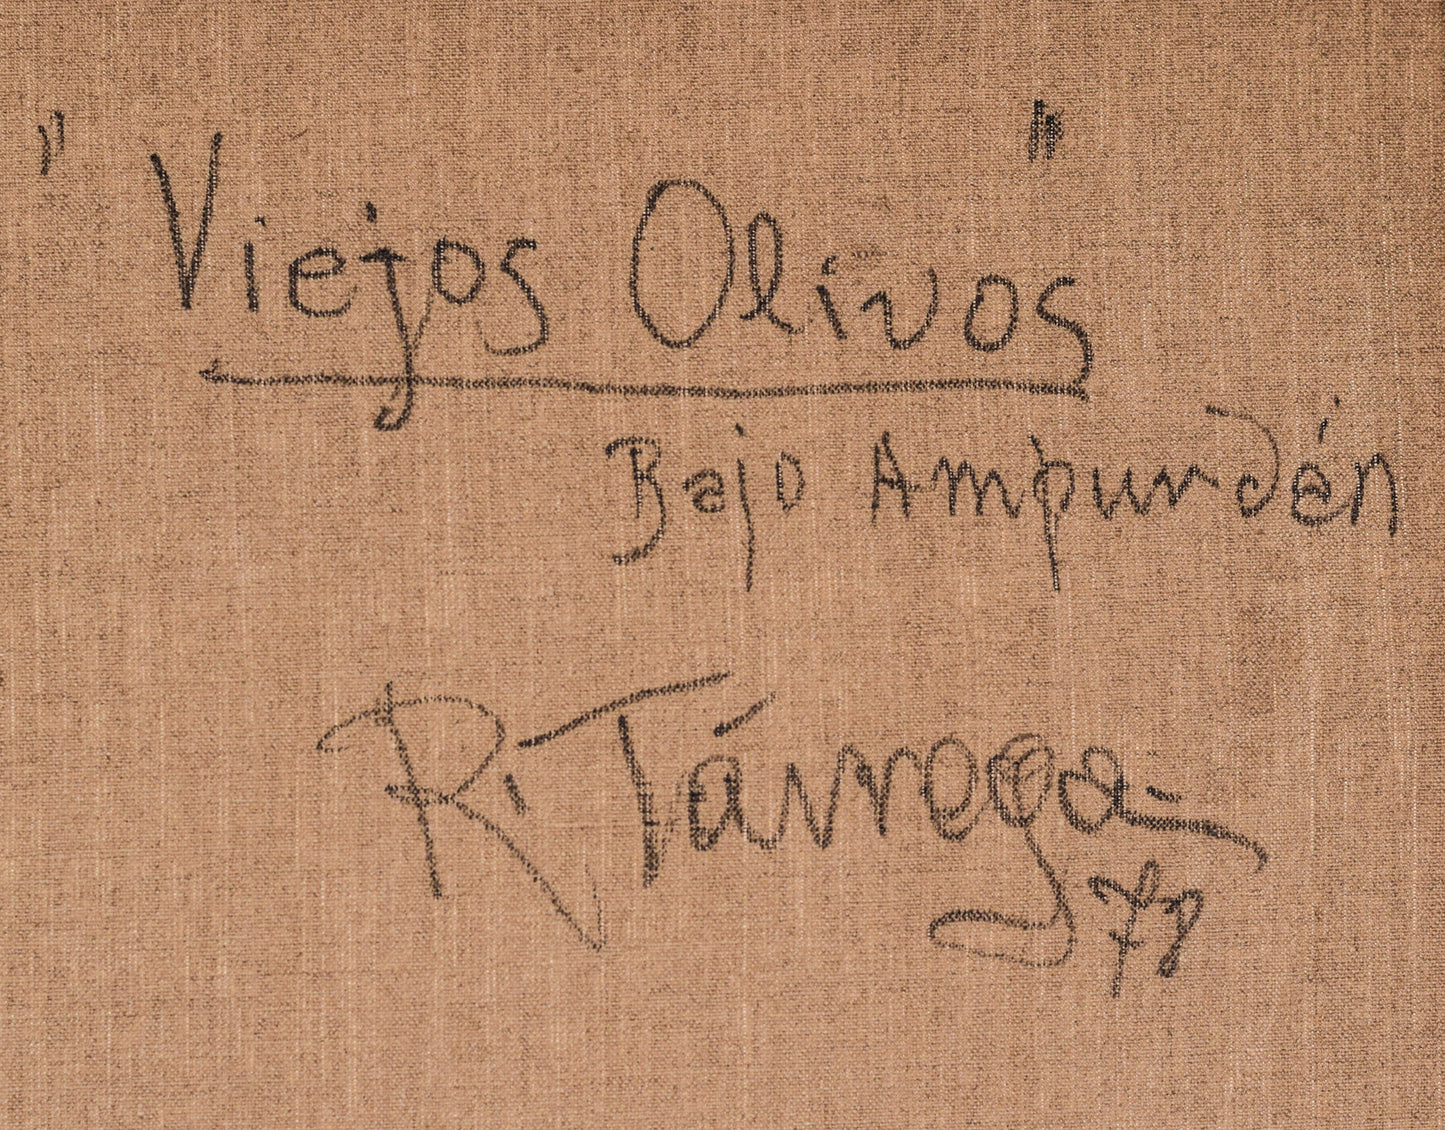 Ricard Tarrega Viladoms - 'Viejos Olivos' ('Old Olive Trees')